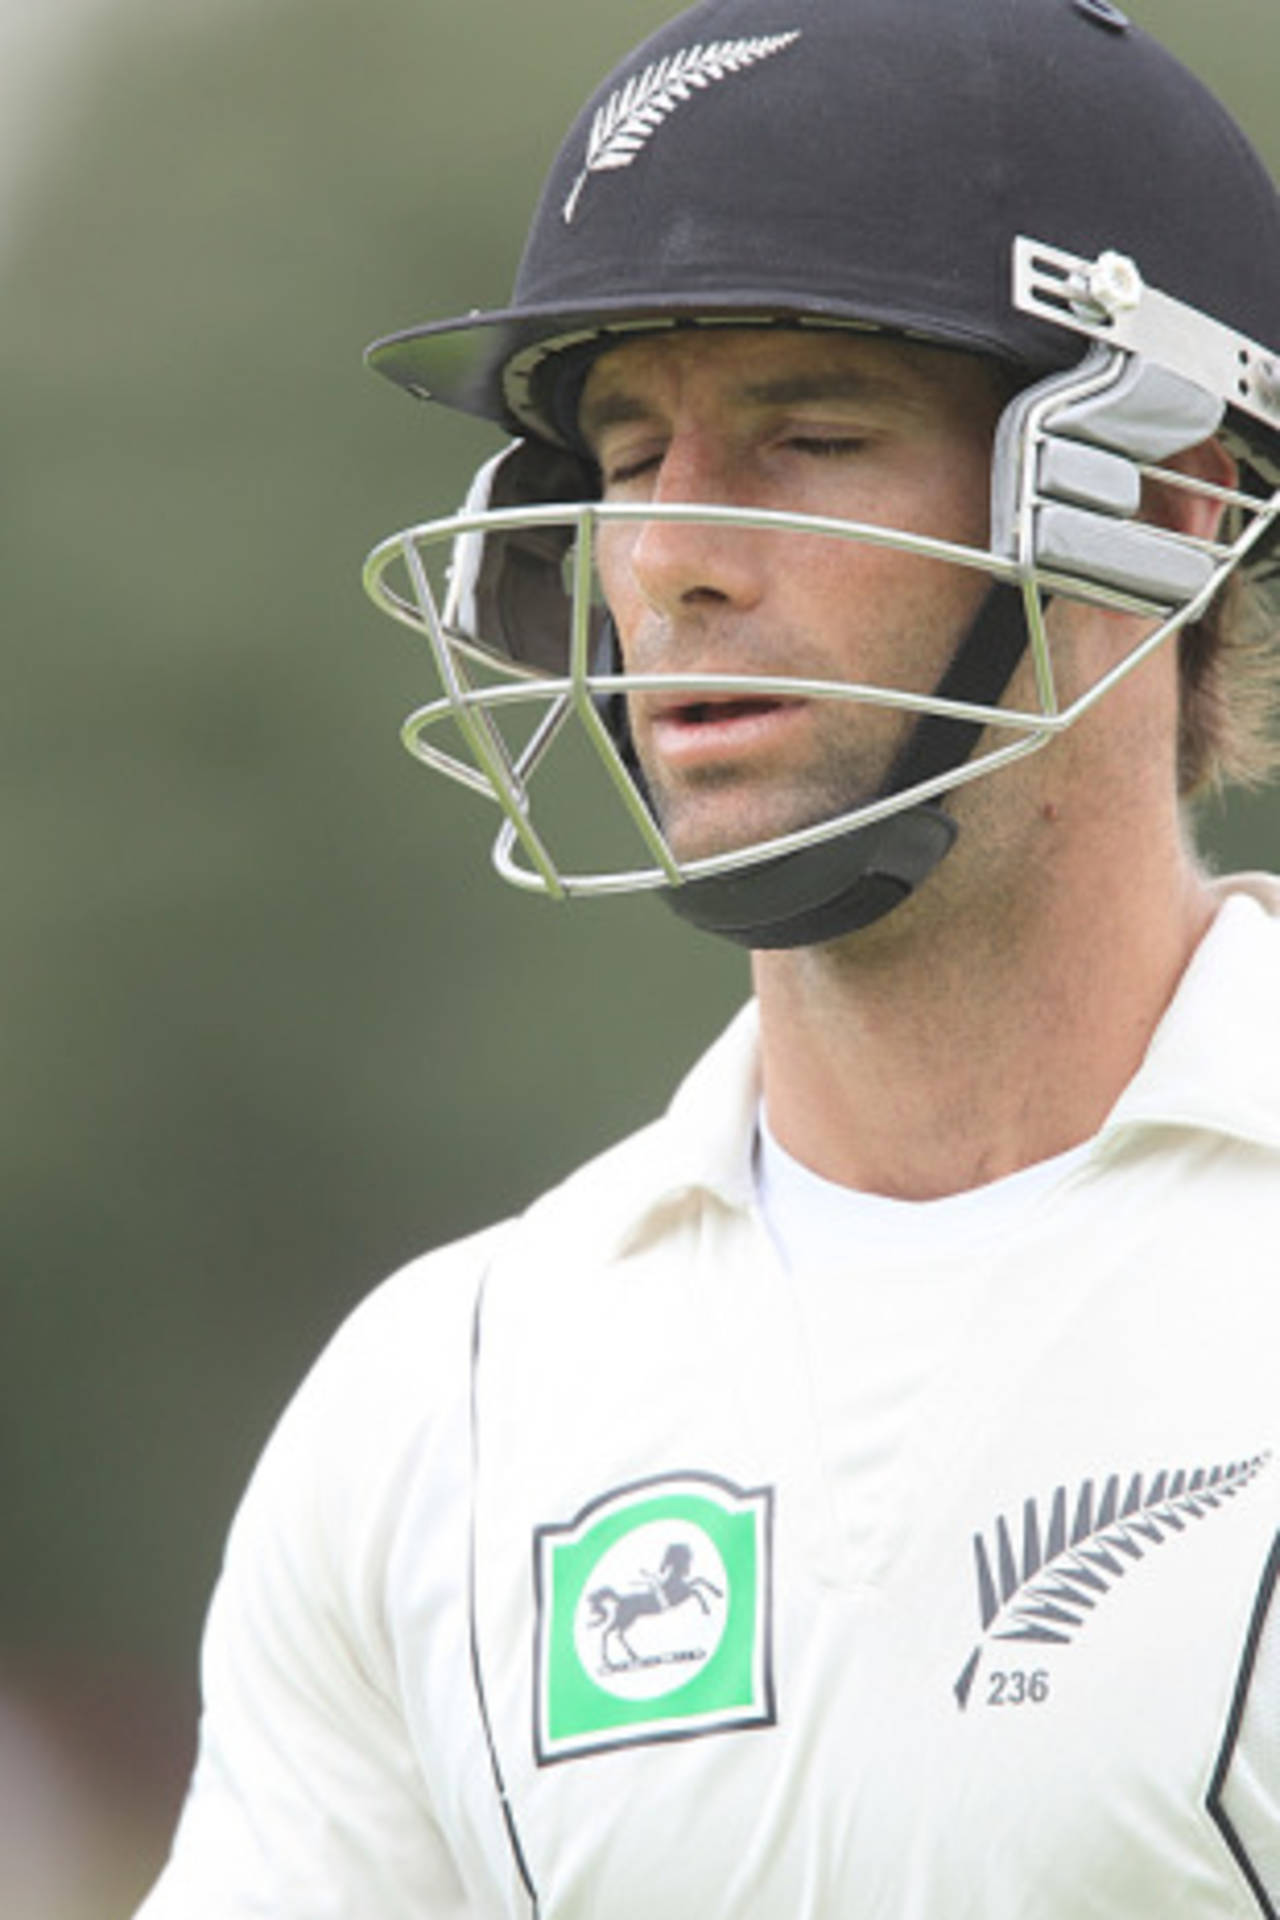 Grant Elliott departs after a silly shot, New Zealand v Pakistan, 2nd Test, Wellington, 4th day, December 6, 2009